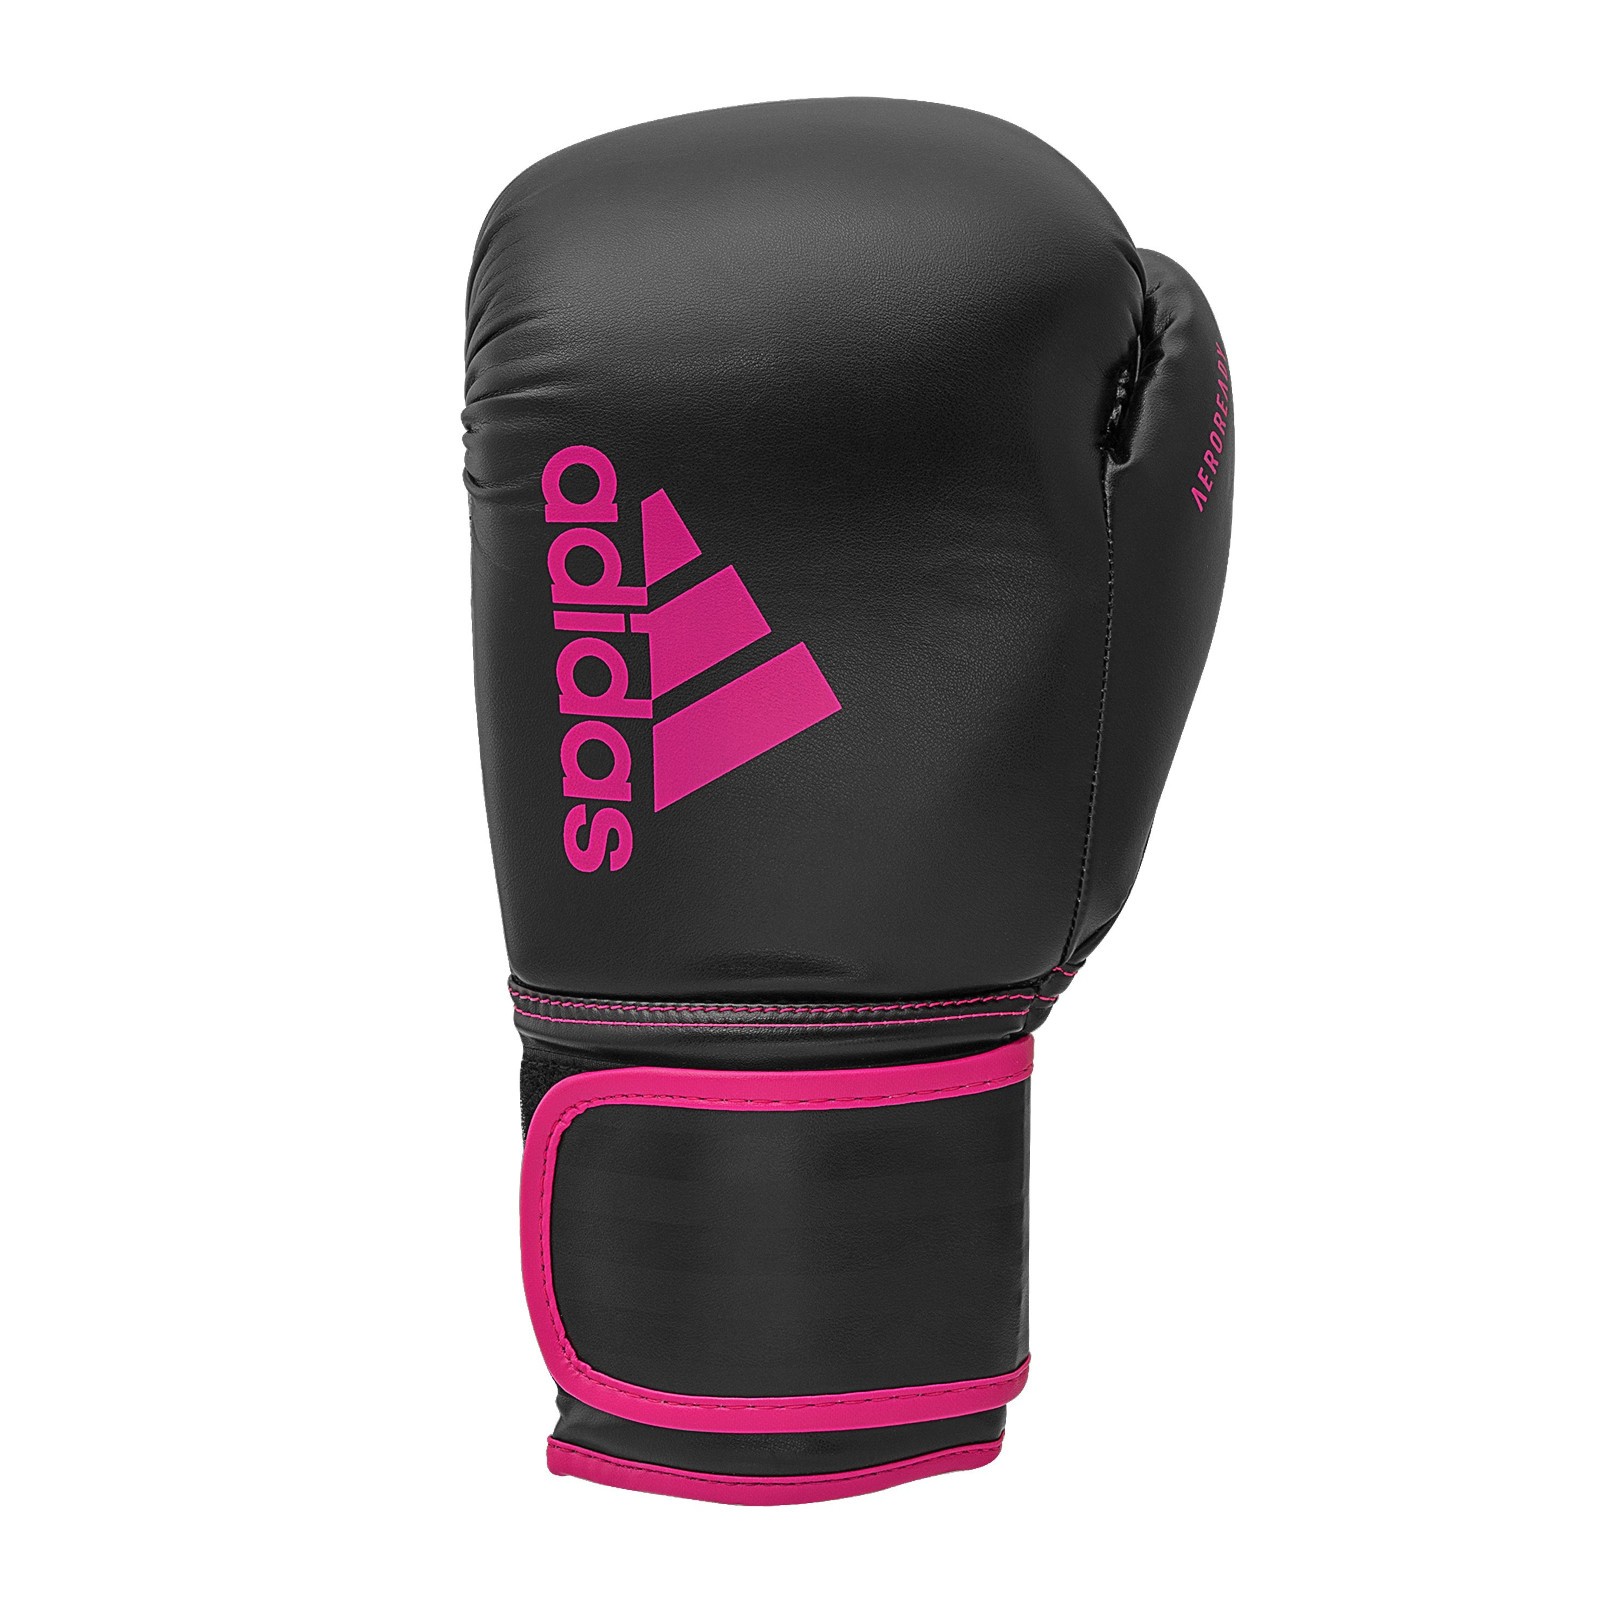 80 - adidas Fitshop Hybrid Boxing Glove